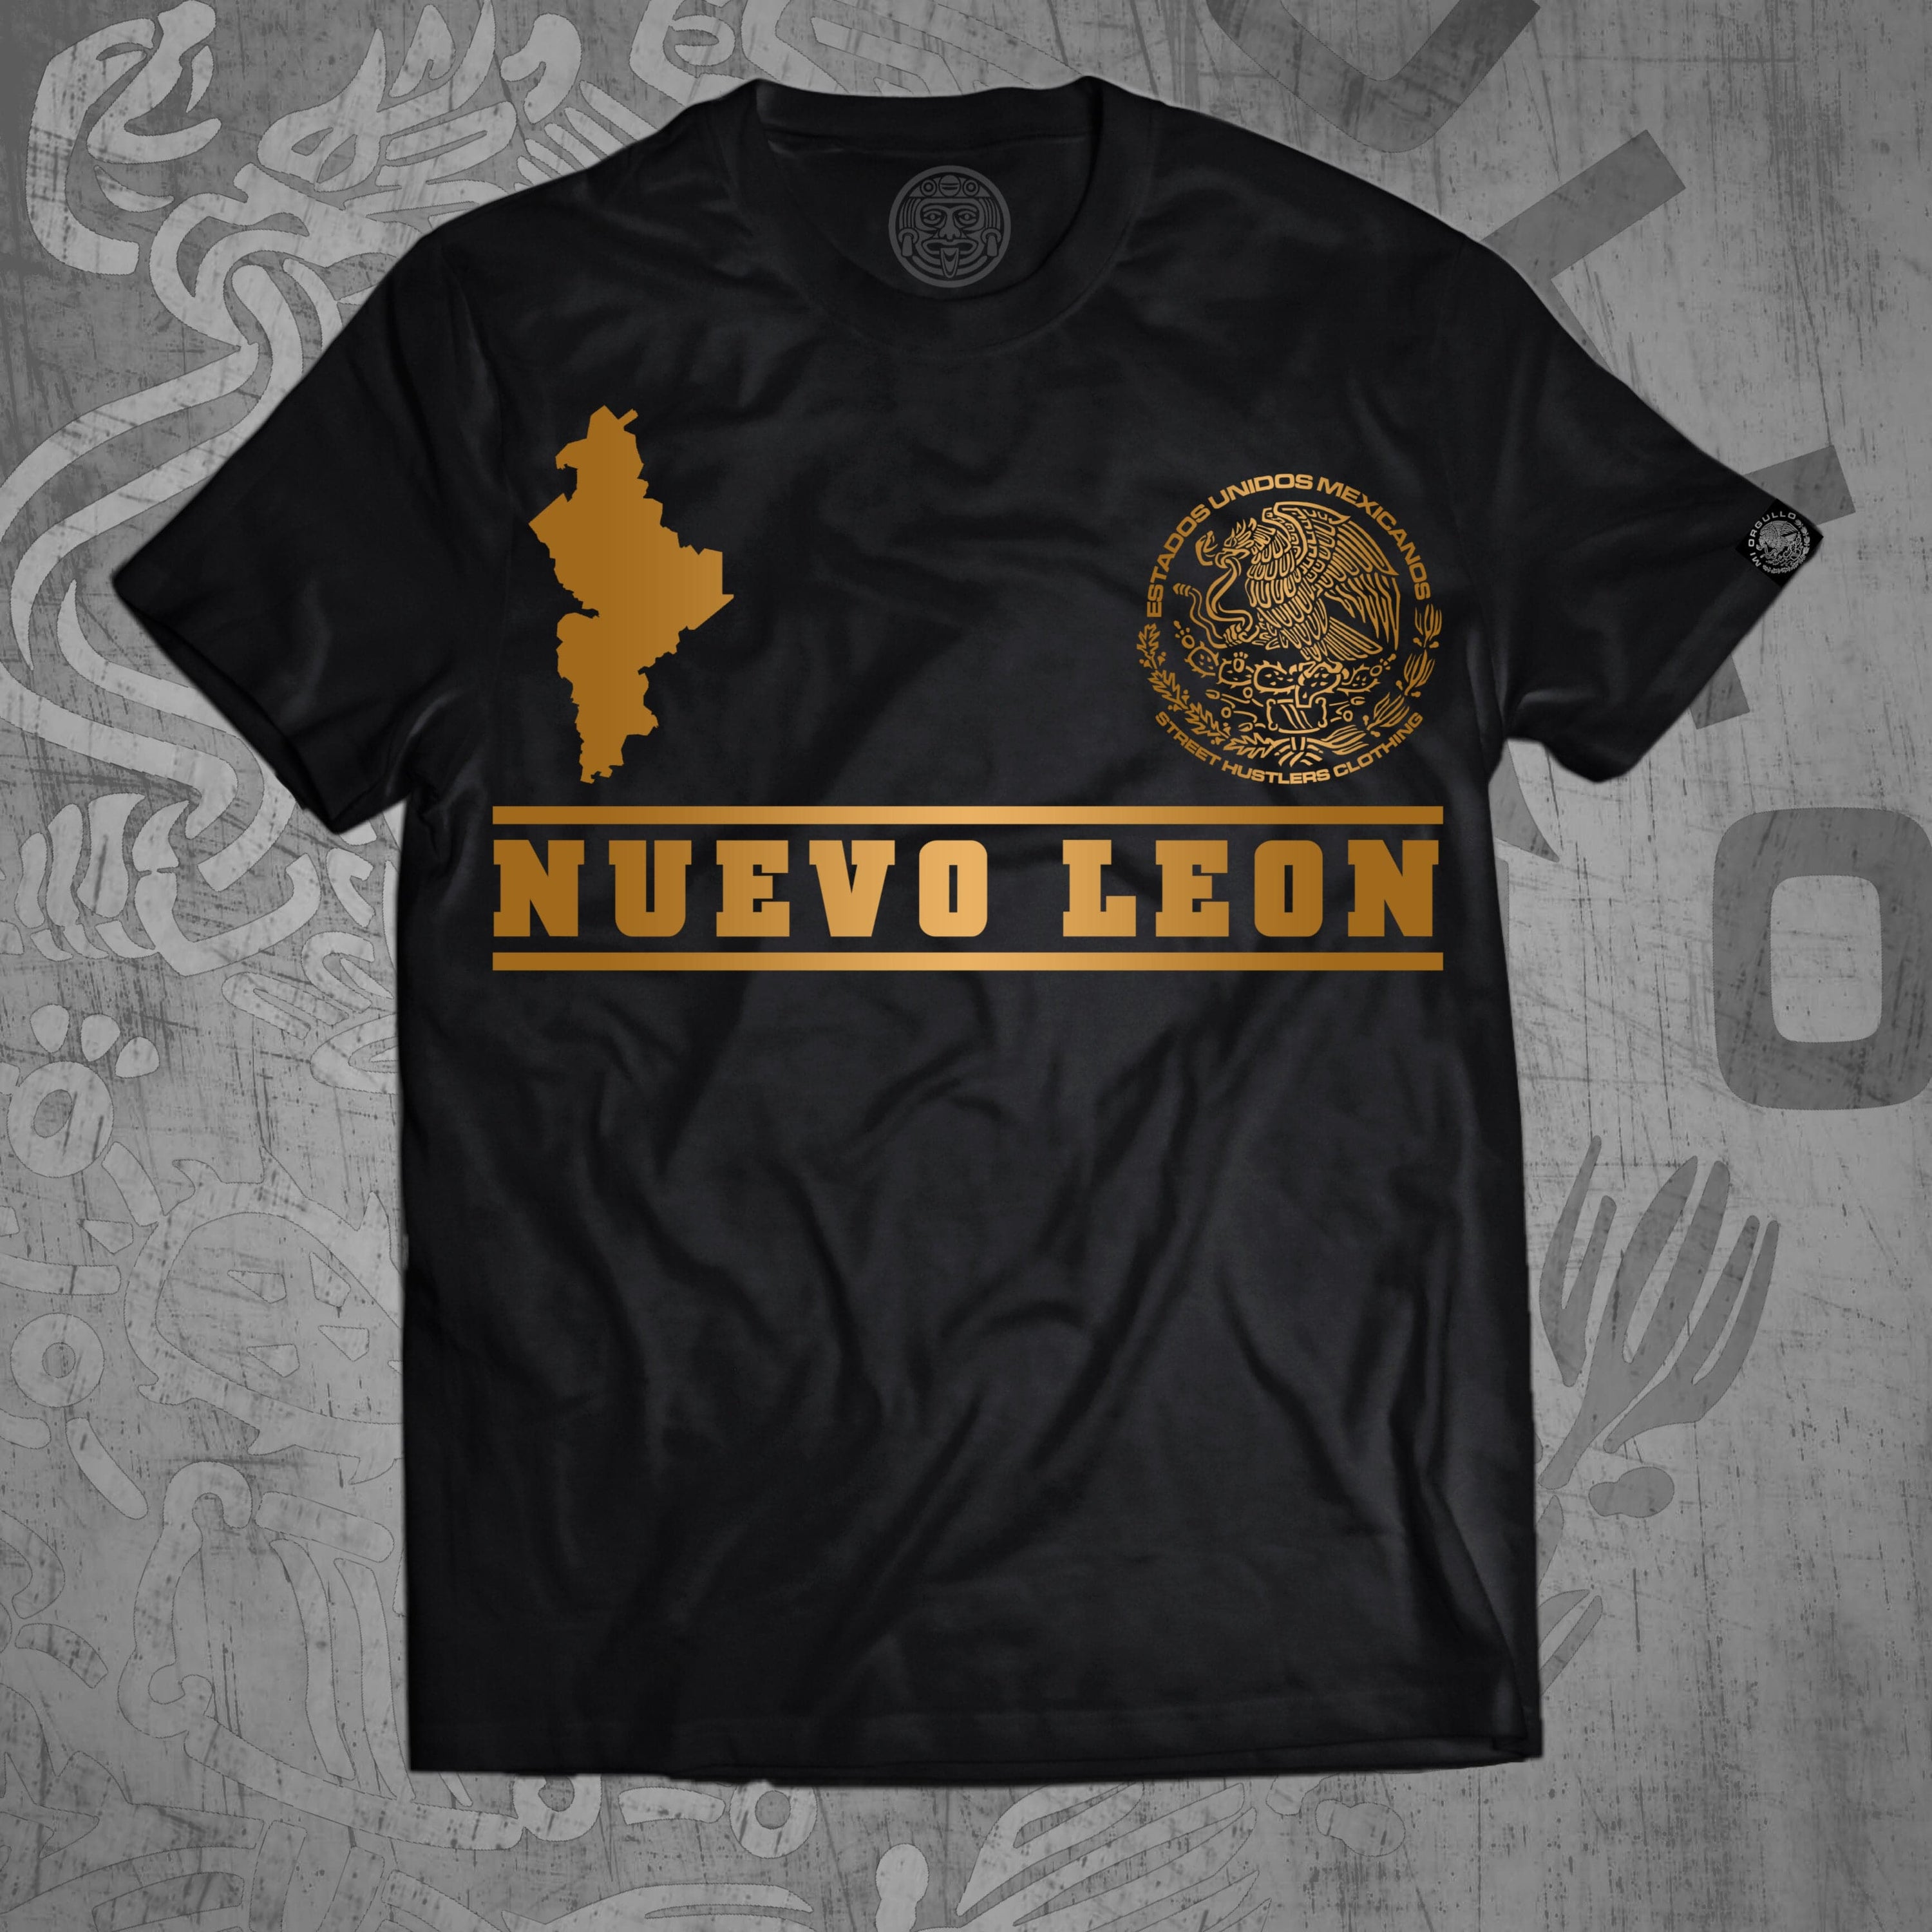 # Nuevo Leon T-shirt (Black)